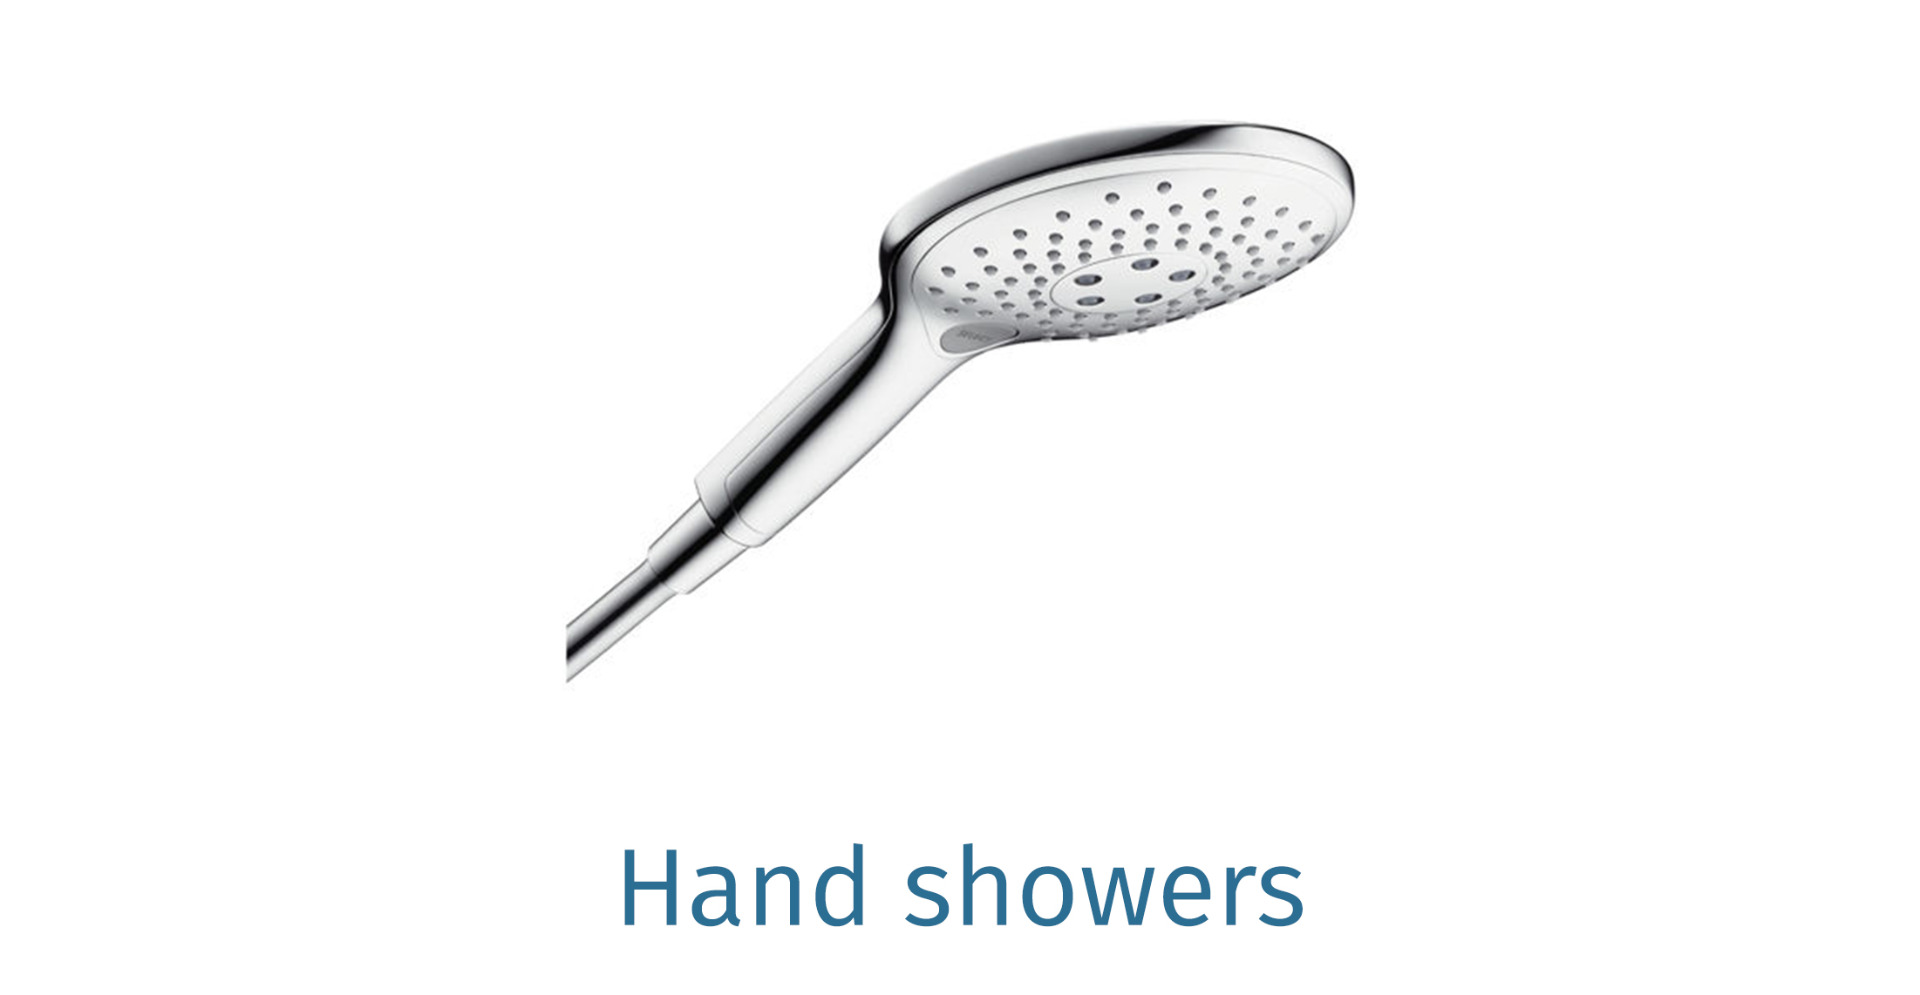 Hand showers